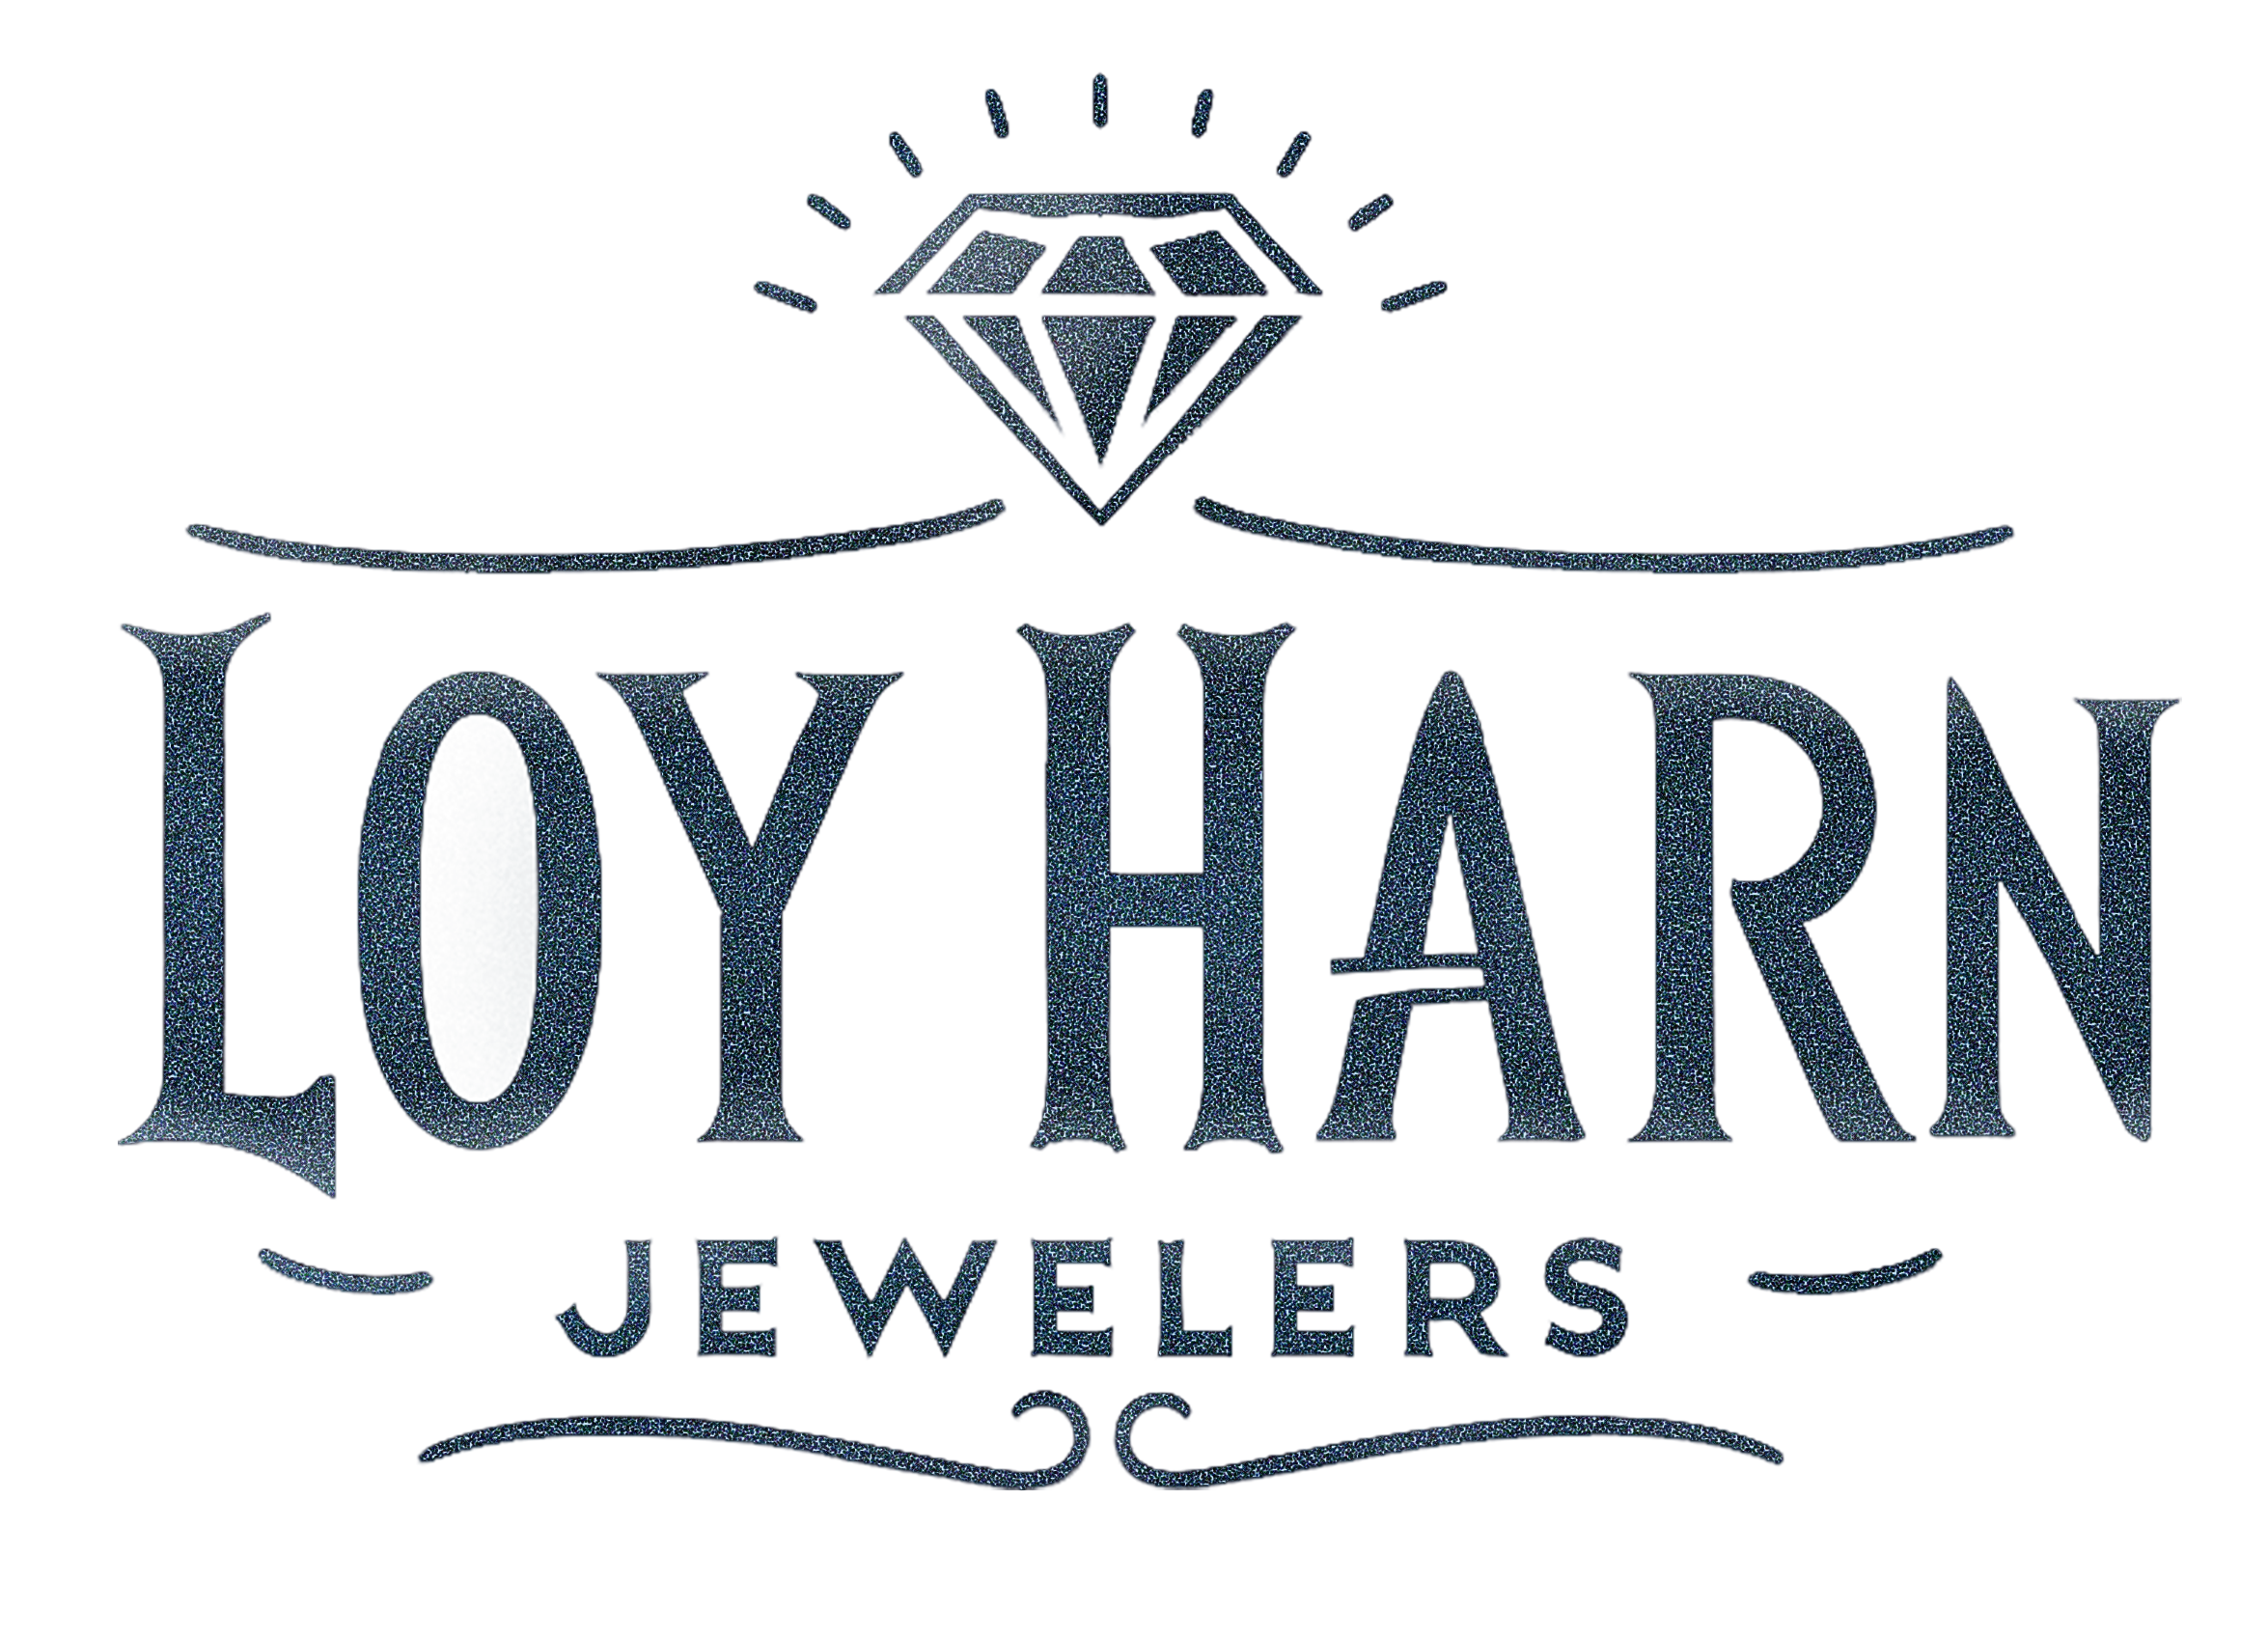 Loy Harn Jewelers